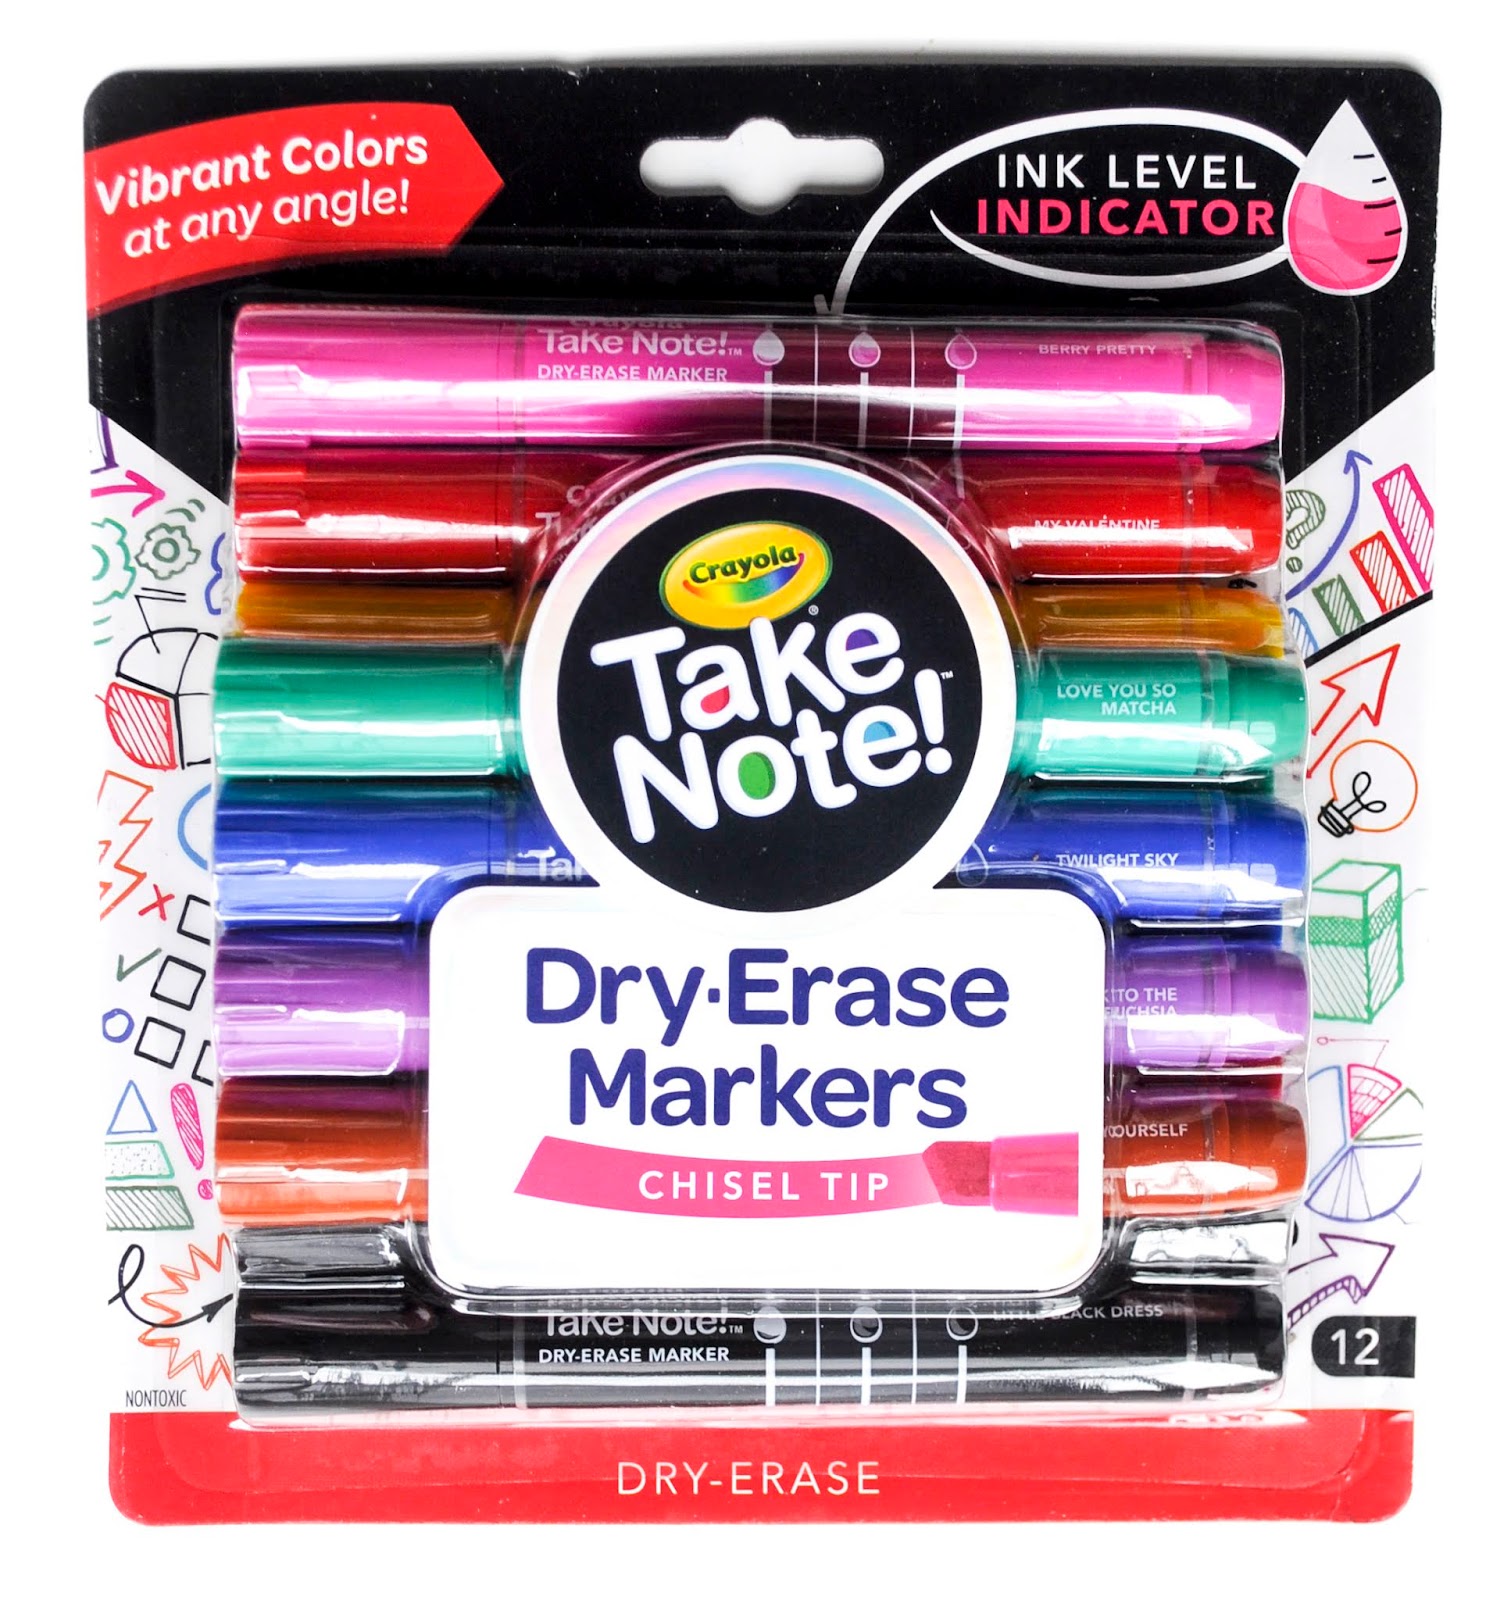 Crayola Take Note! Washable Gel Pens 14 Pkg